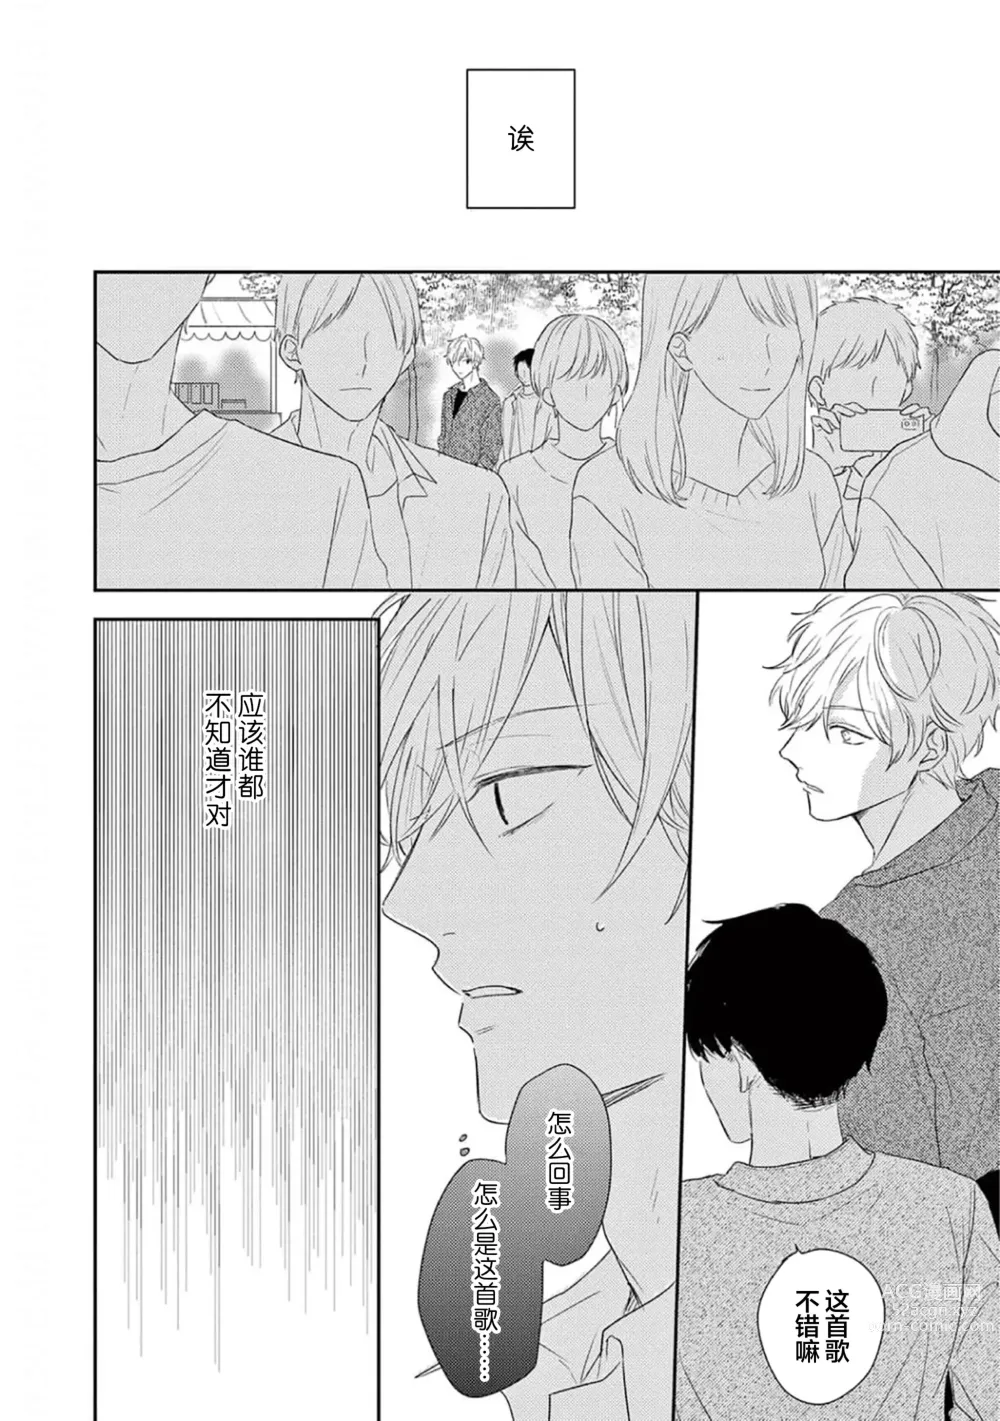 Page 14 of manga 直到这曲恋歌结束为止